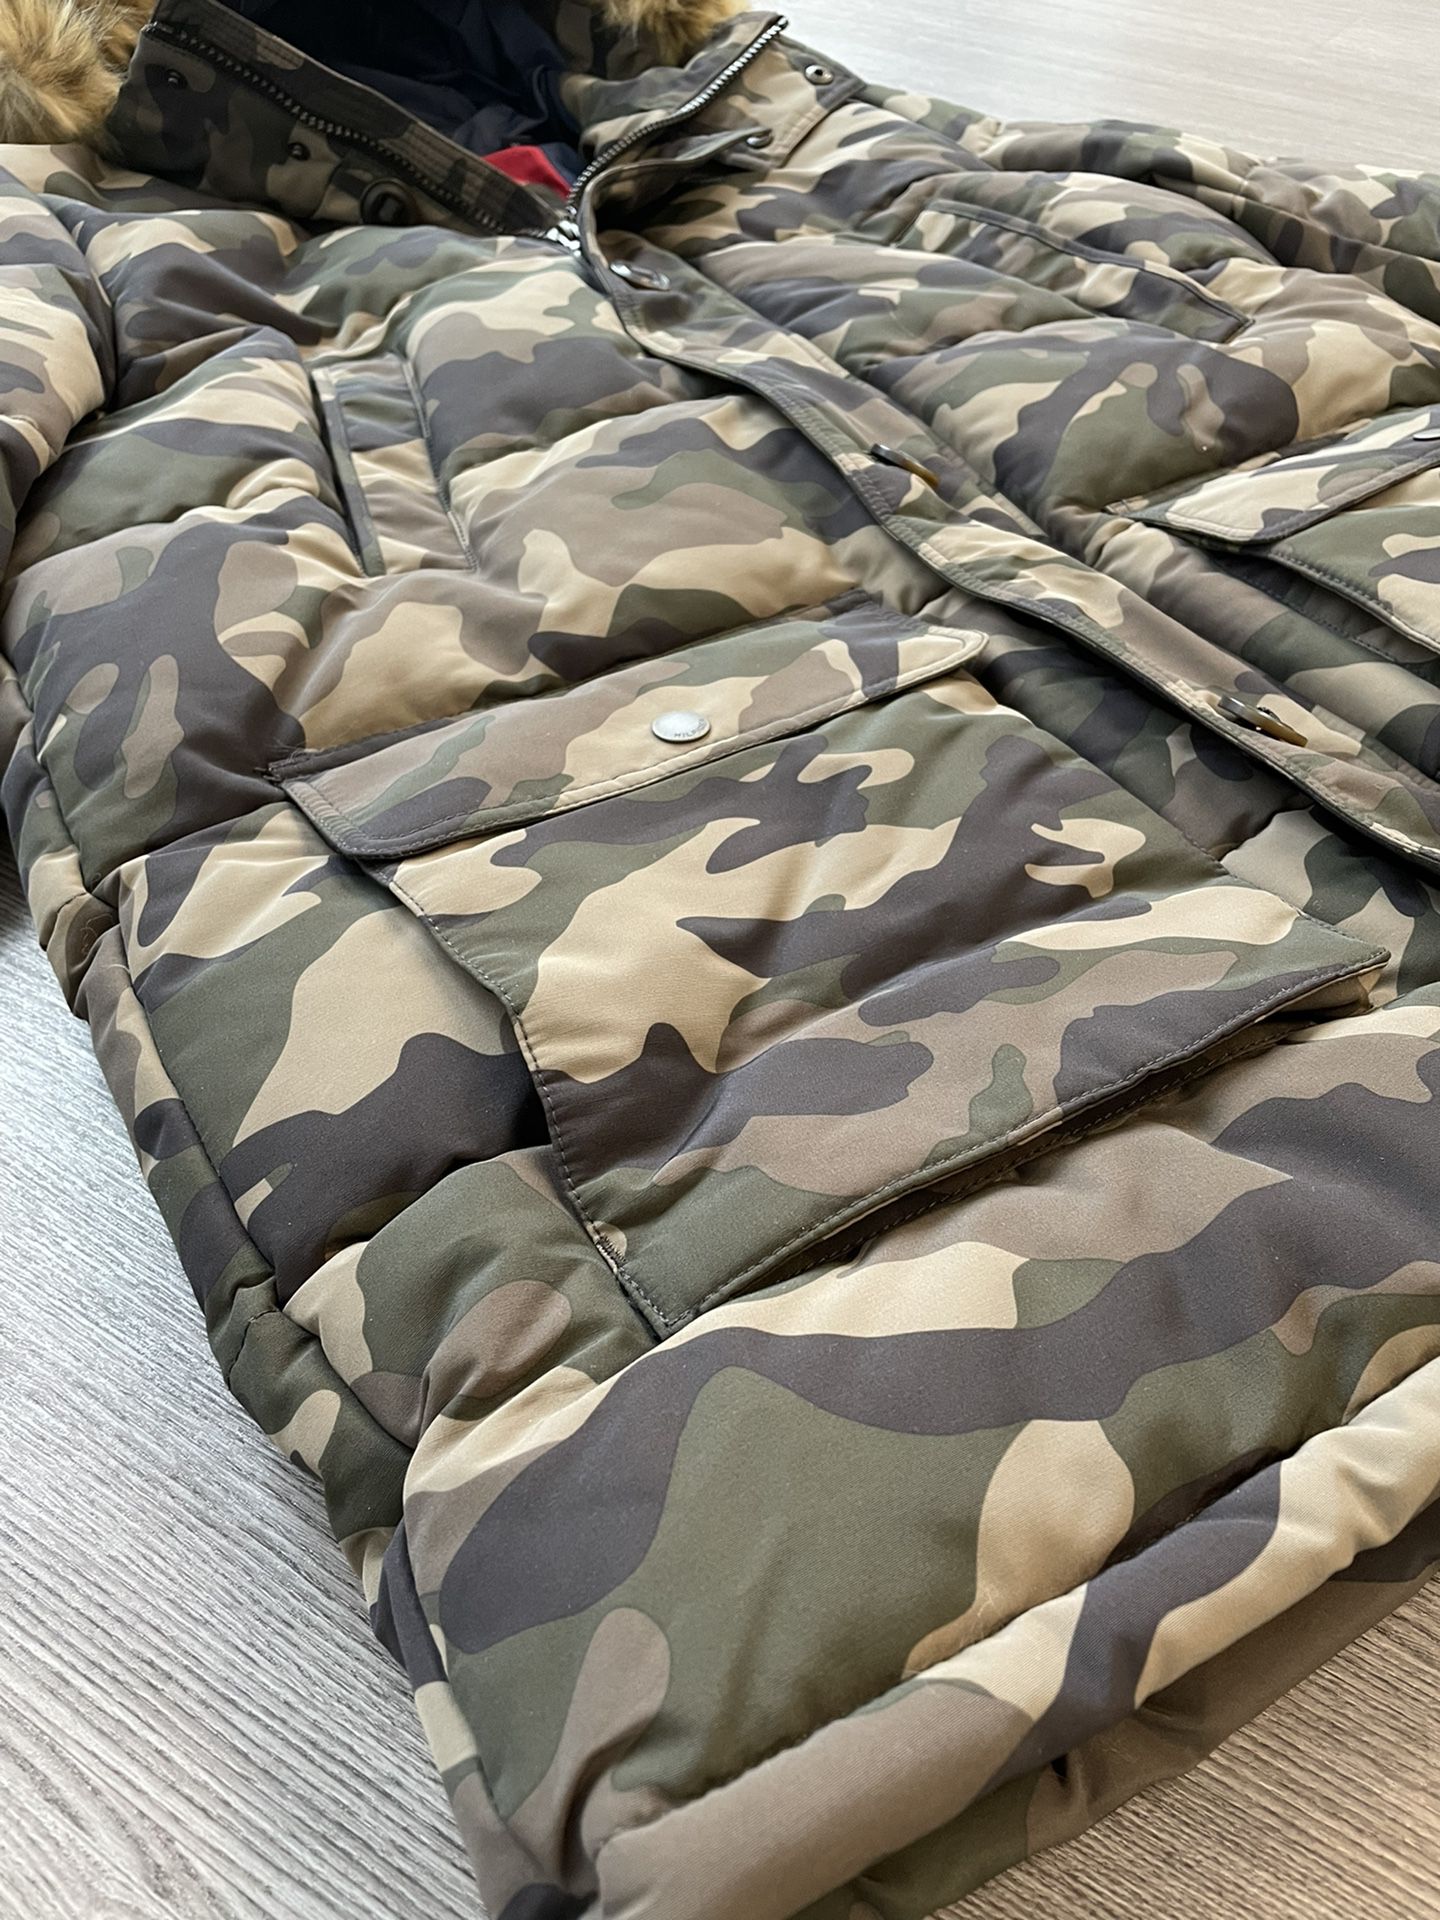 Tommy Hilfiger Camouflage Hooded Jacket